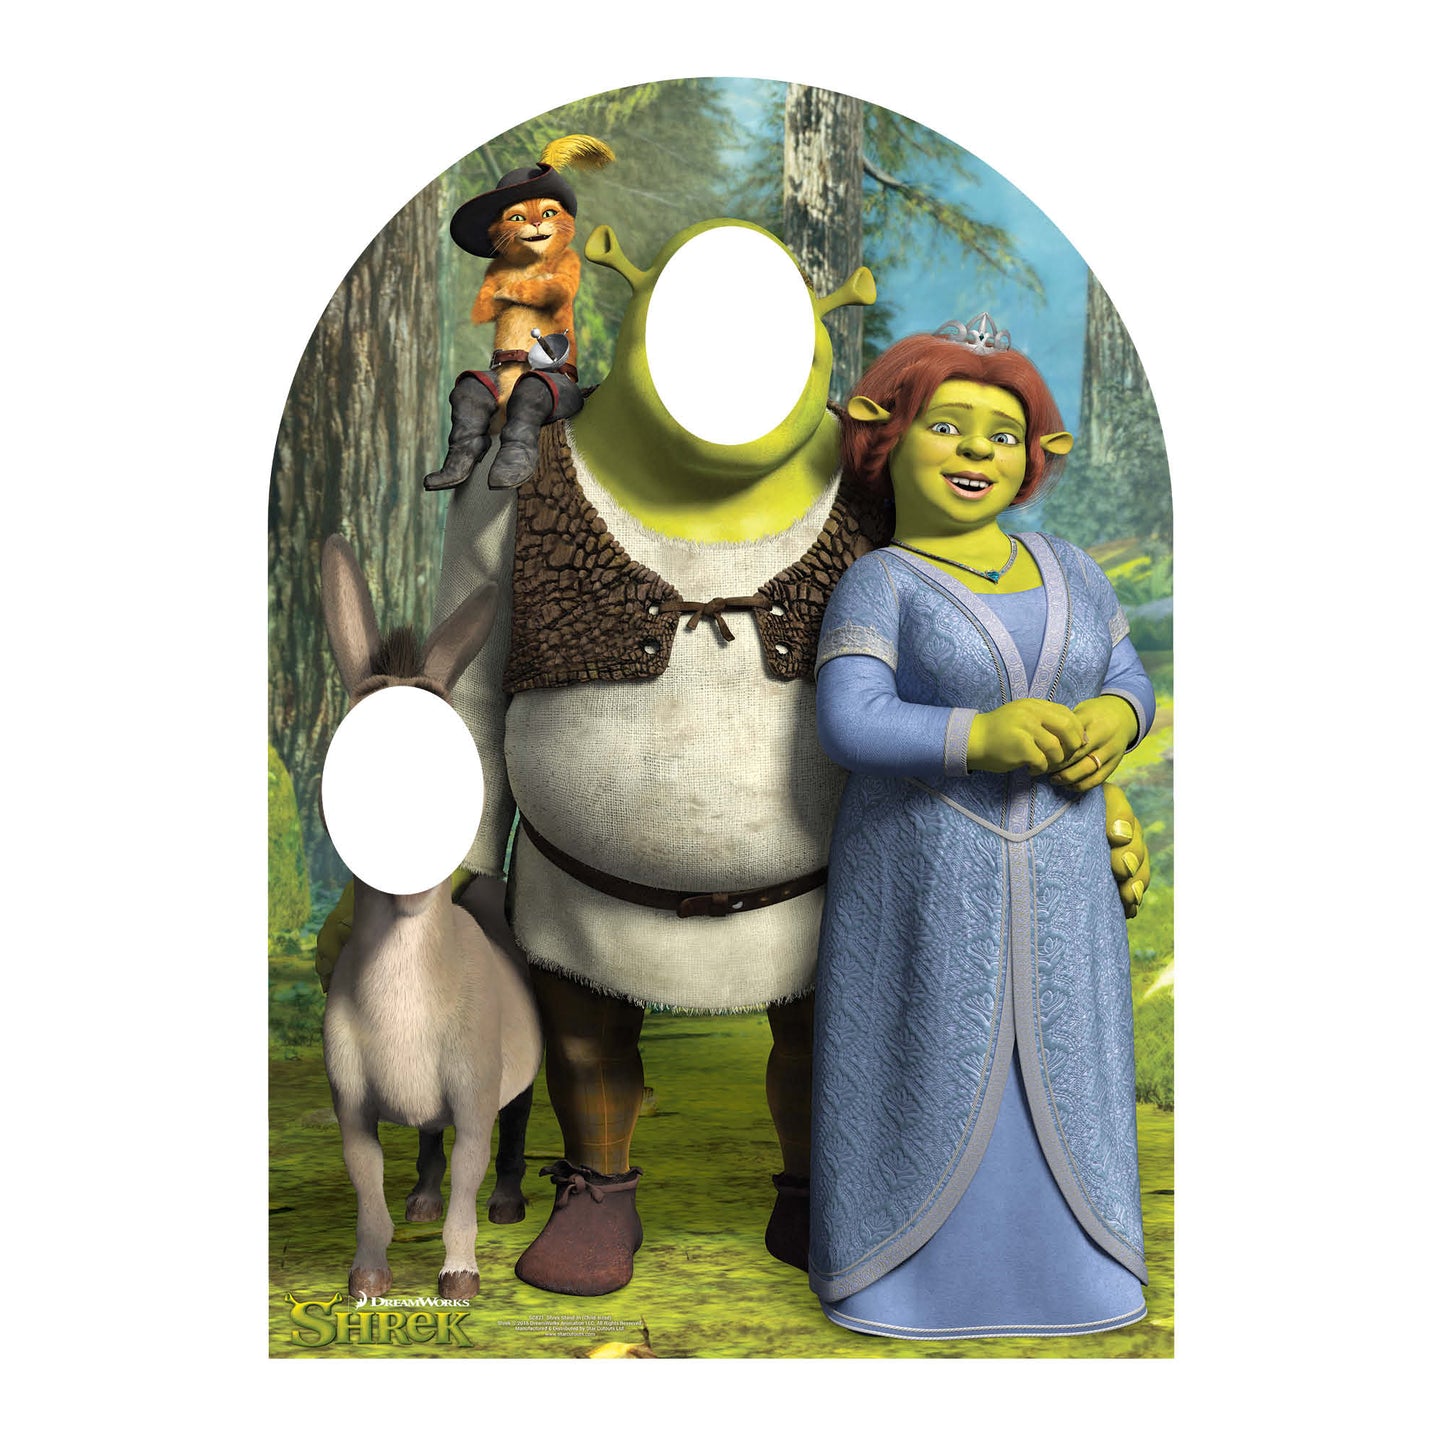 Shrek Stand-in  Cardboard Cutout